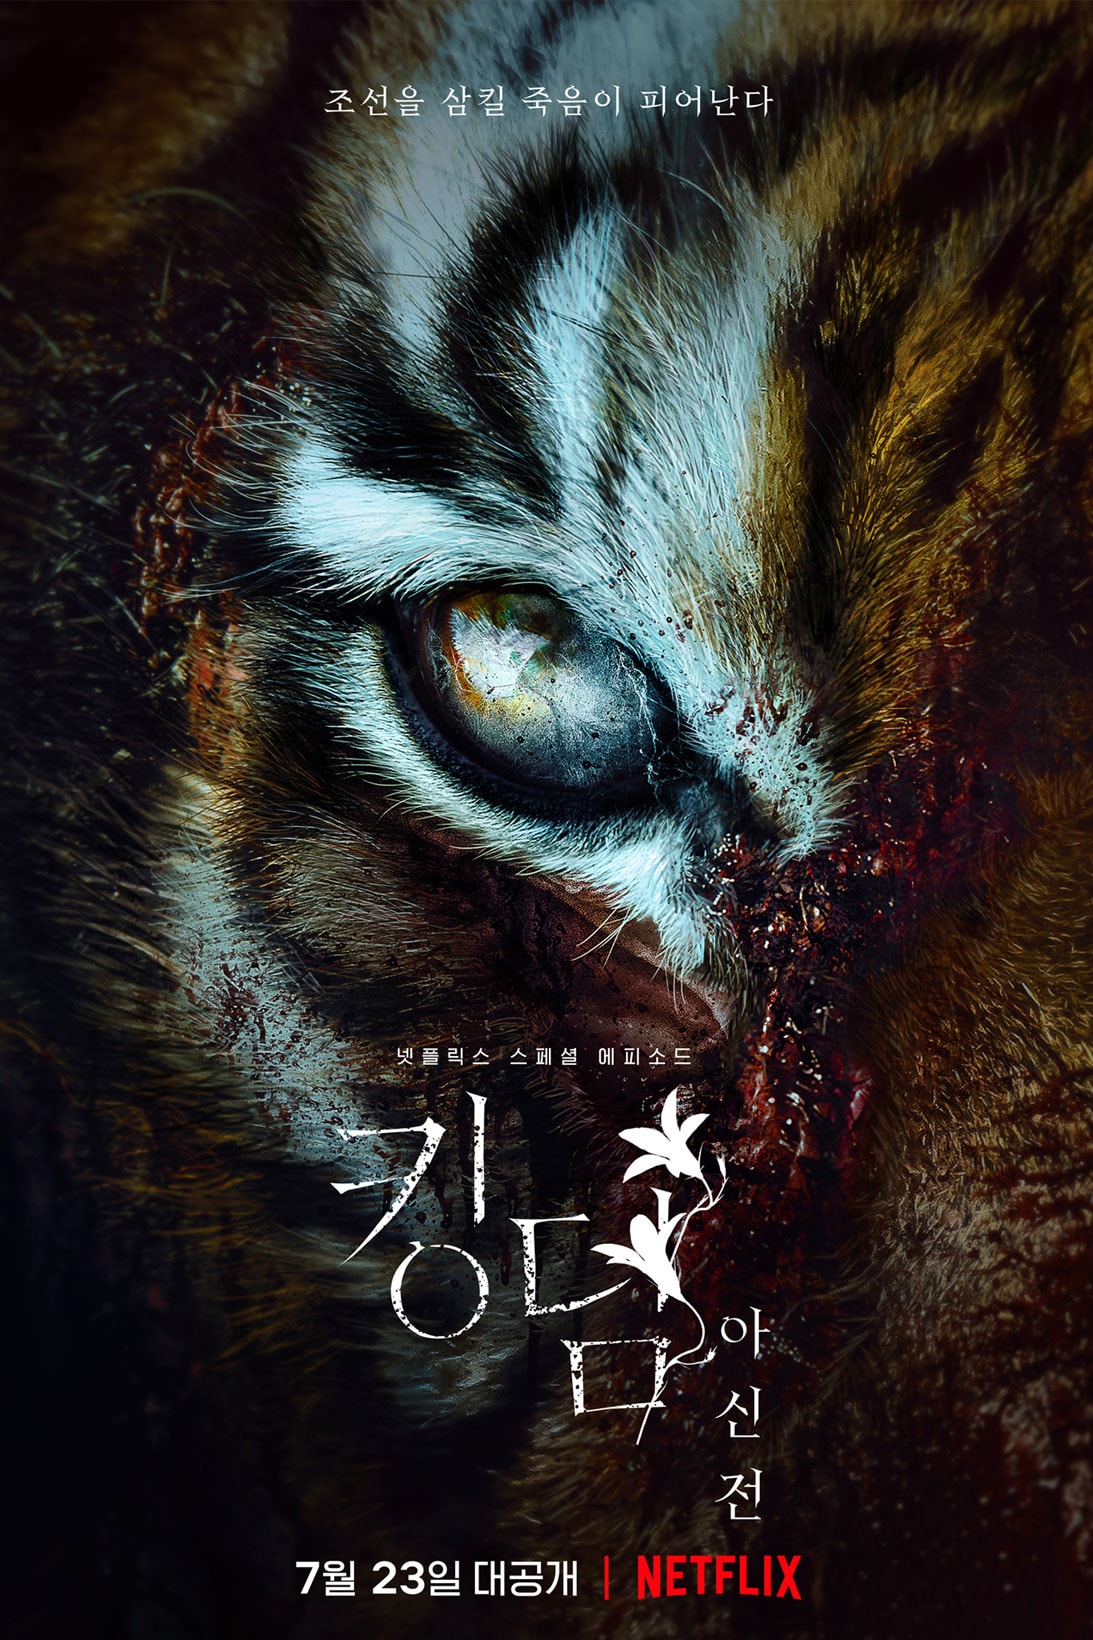 netflix kingdom ashin of the north k-drama zombie special episode poster tiger closeup